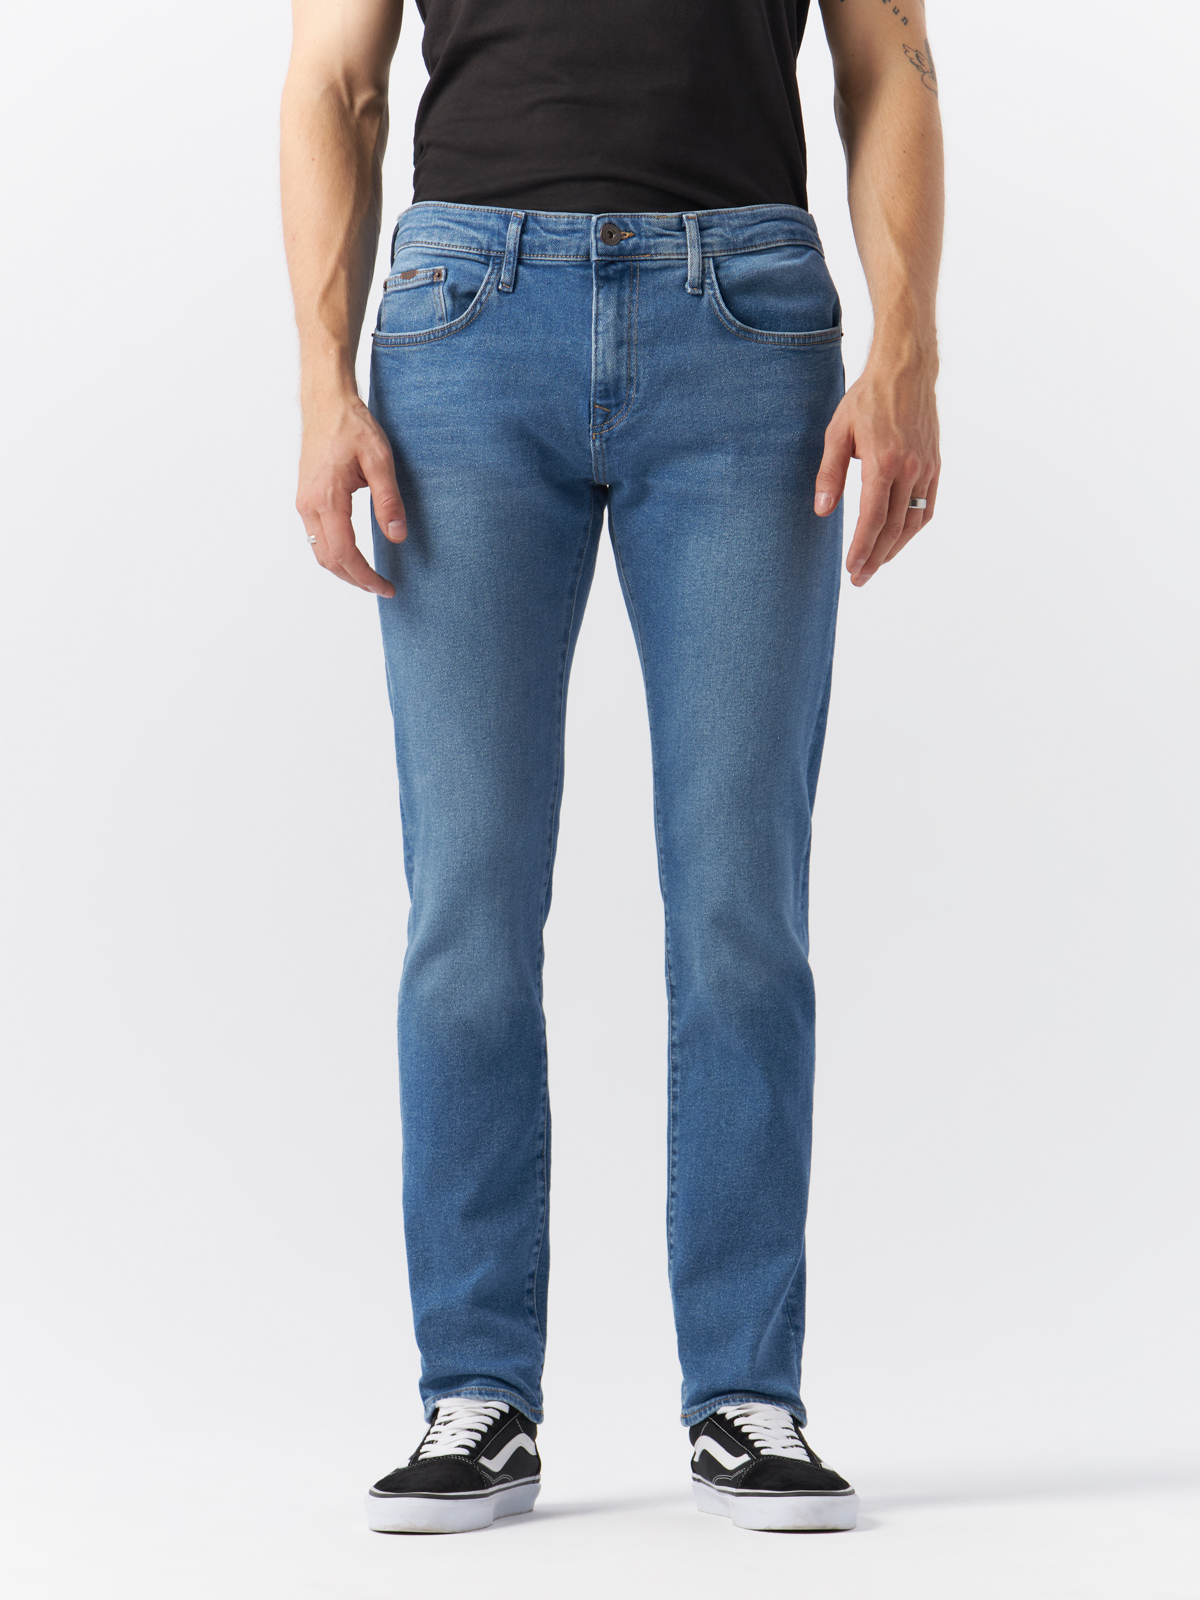 Джинсы Cross Jeans для мужчин, F 152-134, размер 29-32, синие